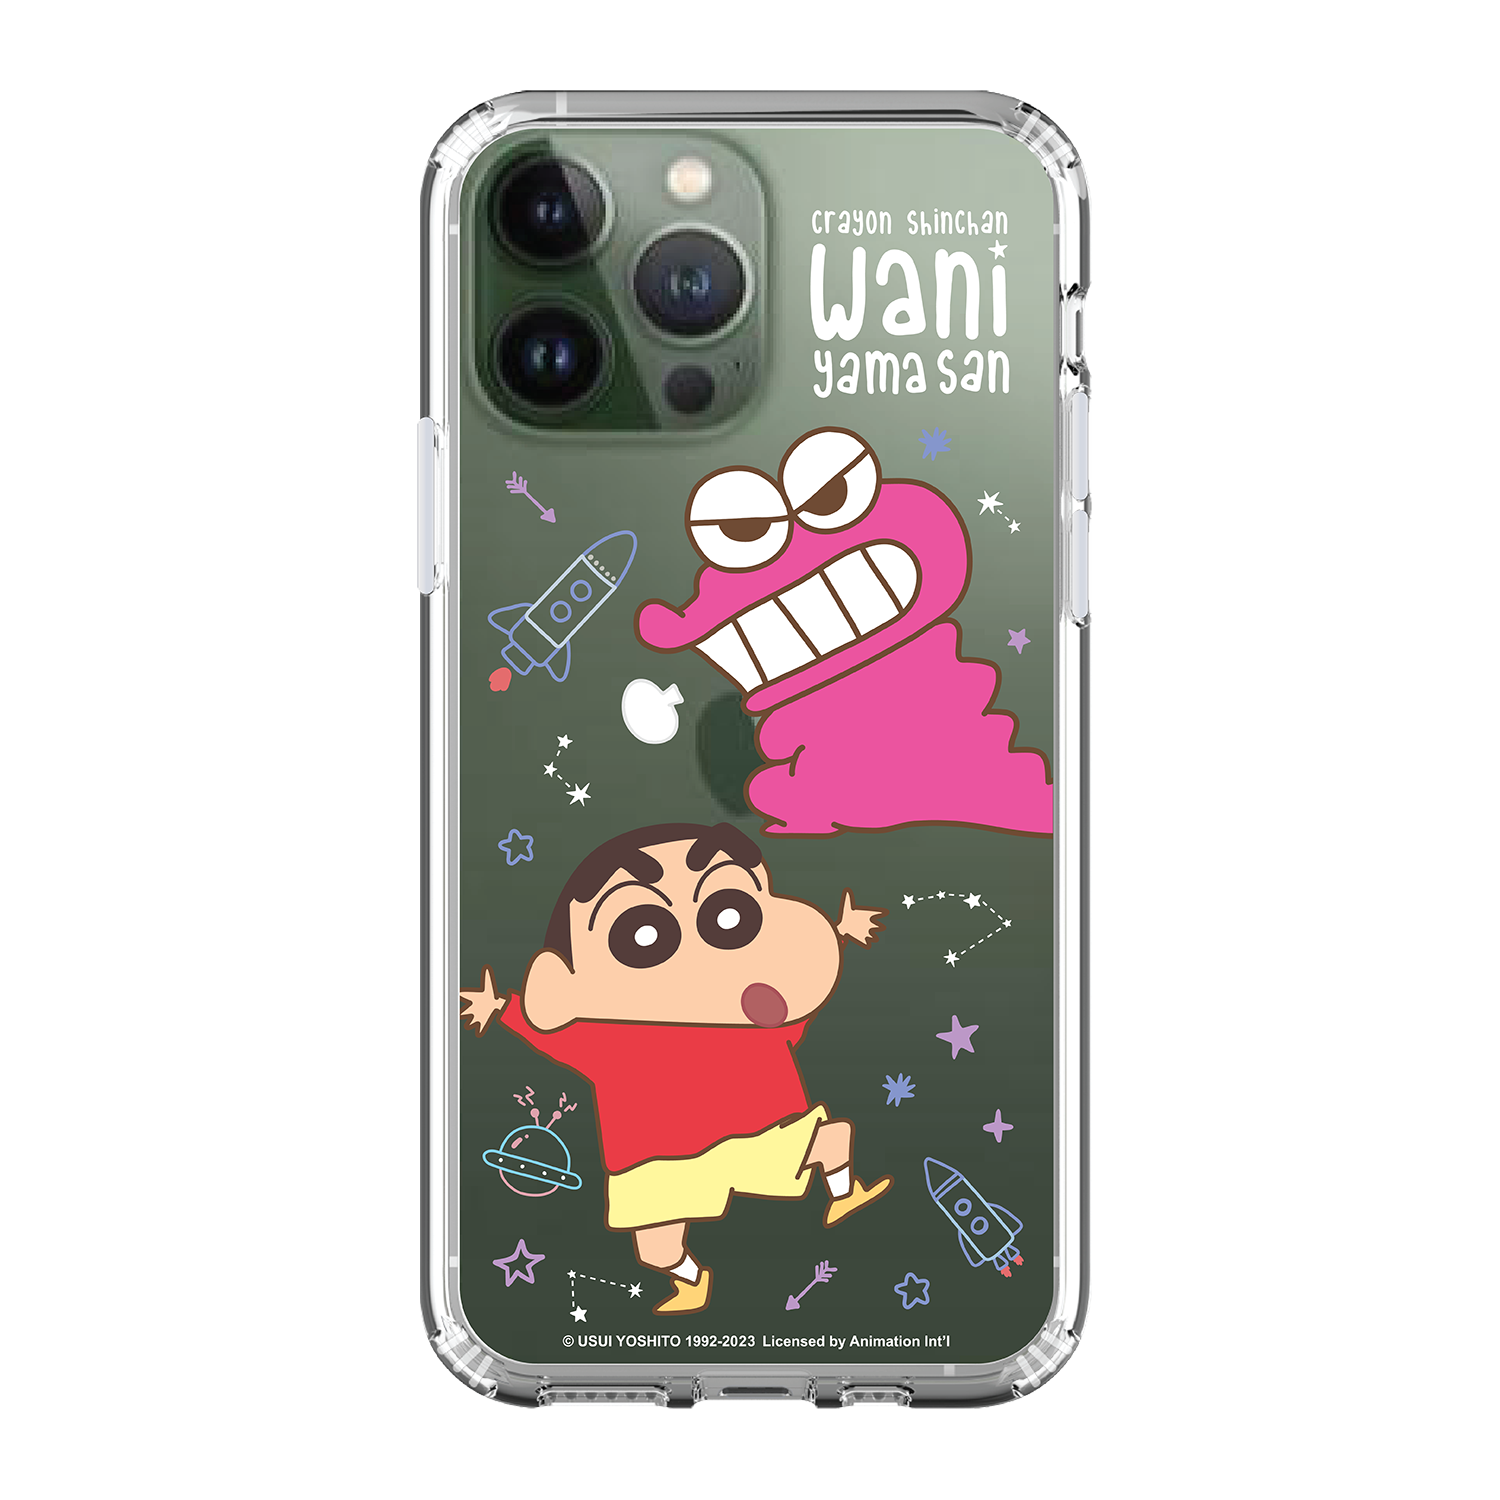 Crayon Shin-chan Clear Case / iPhone Case / Android Case / Samsung Case 蠟筆小新 正版授權 全包邊氣囊防撞手機殼 (SC280)